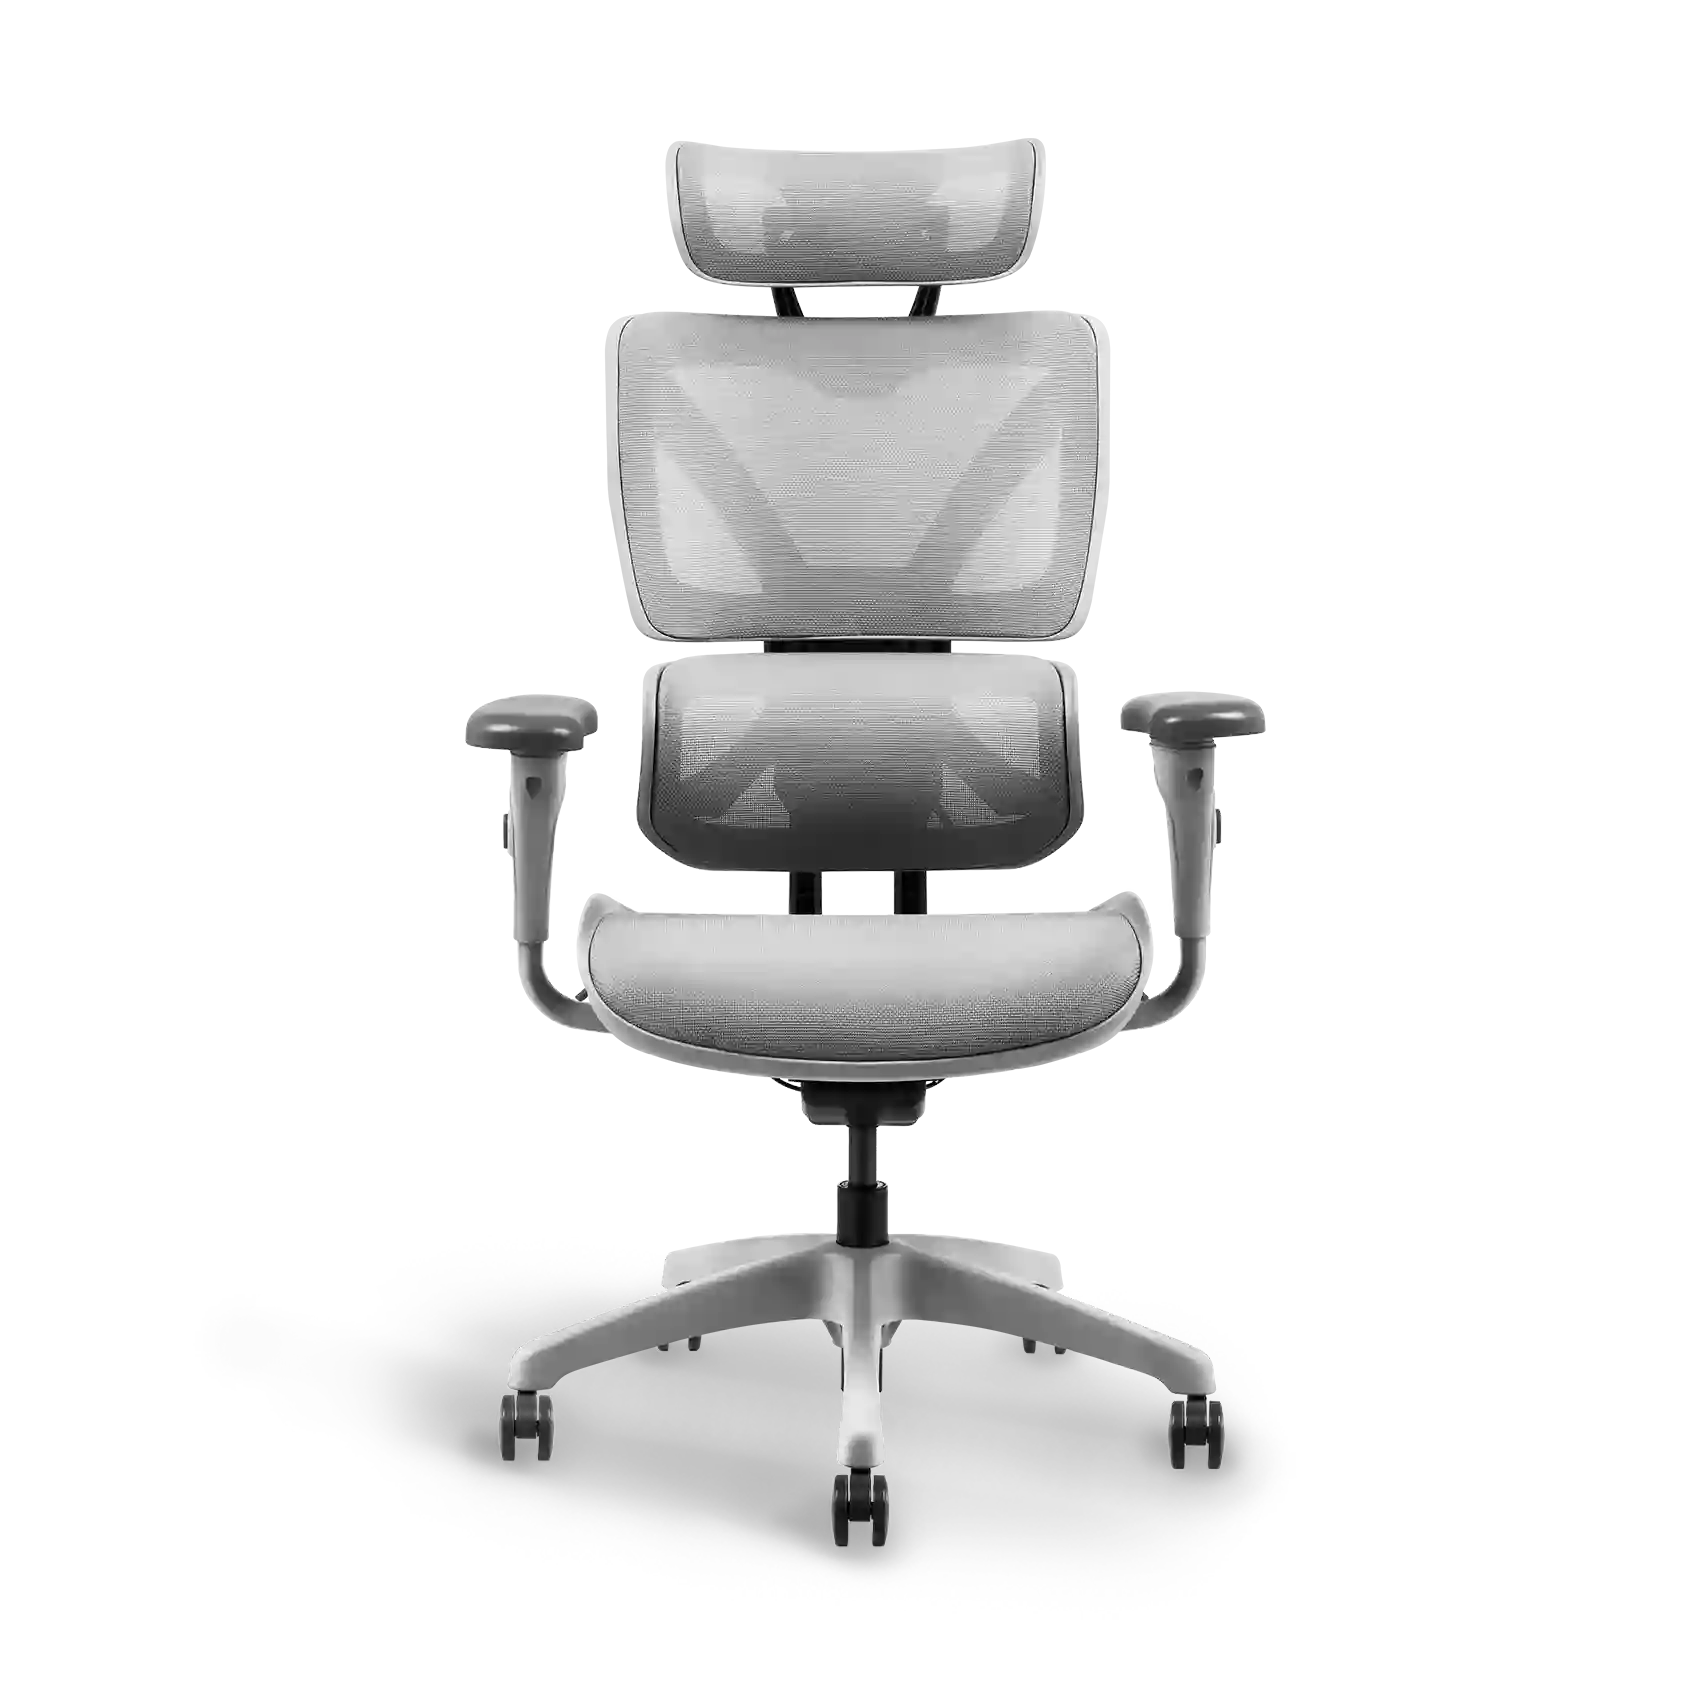 Ayla Ergonomic Chair Grey, emphasizing the modern design and ergonomic shape for optimal office comfort.